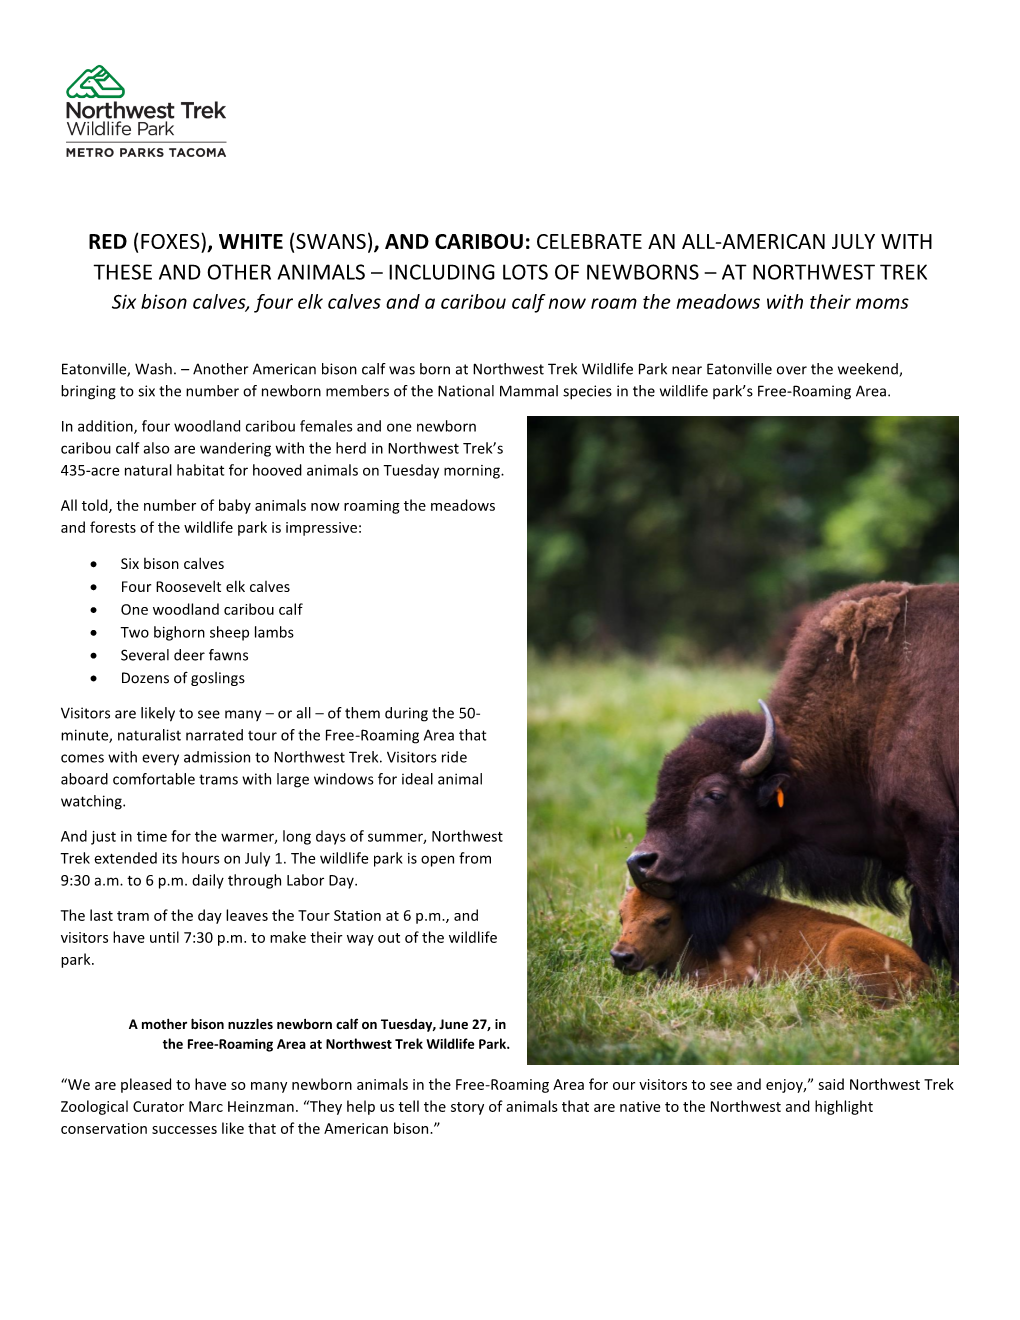 Sixth Bison Calf Born at Northwest